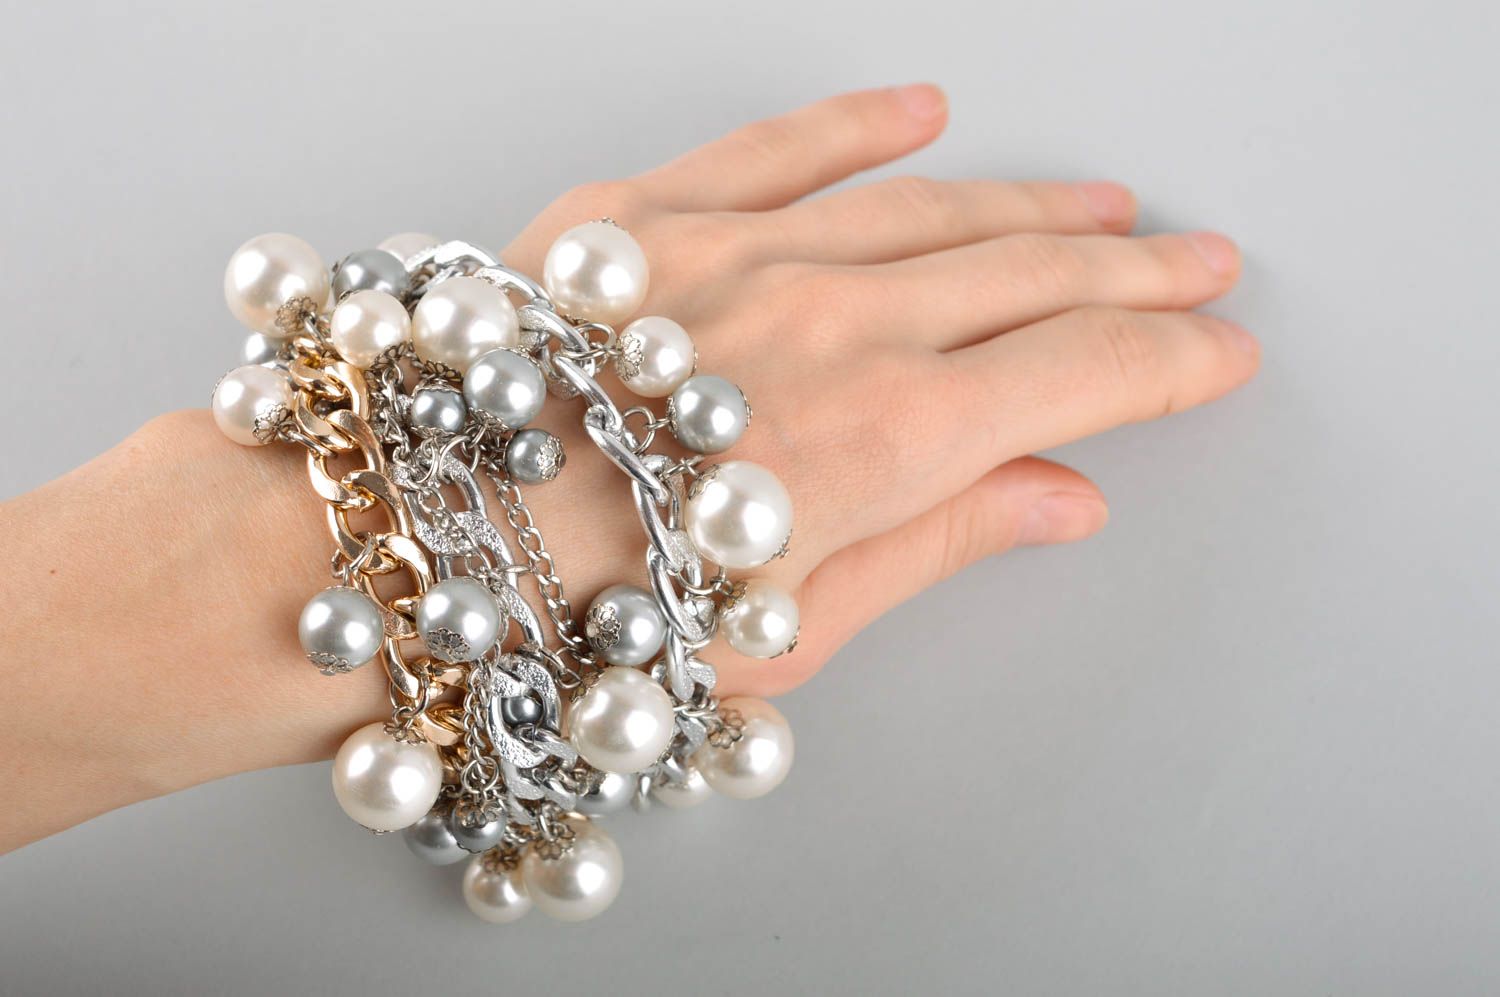 Bracelet with pearls Summer jewelry set - Wedding jewellery online